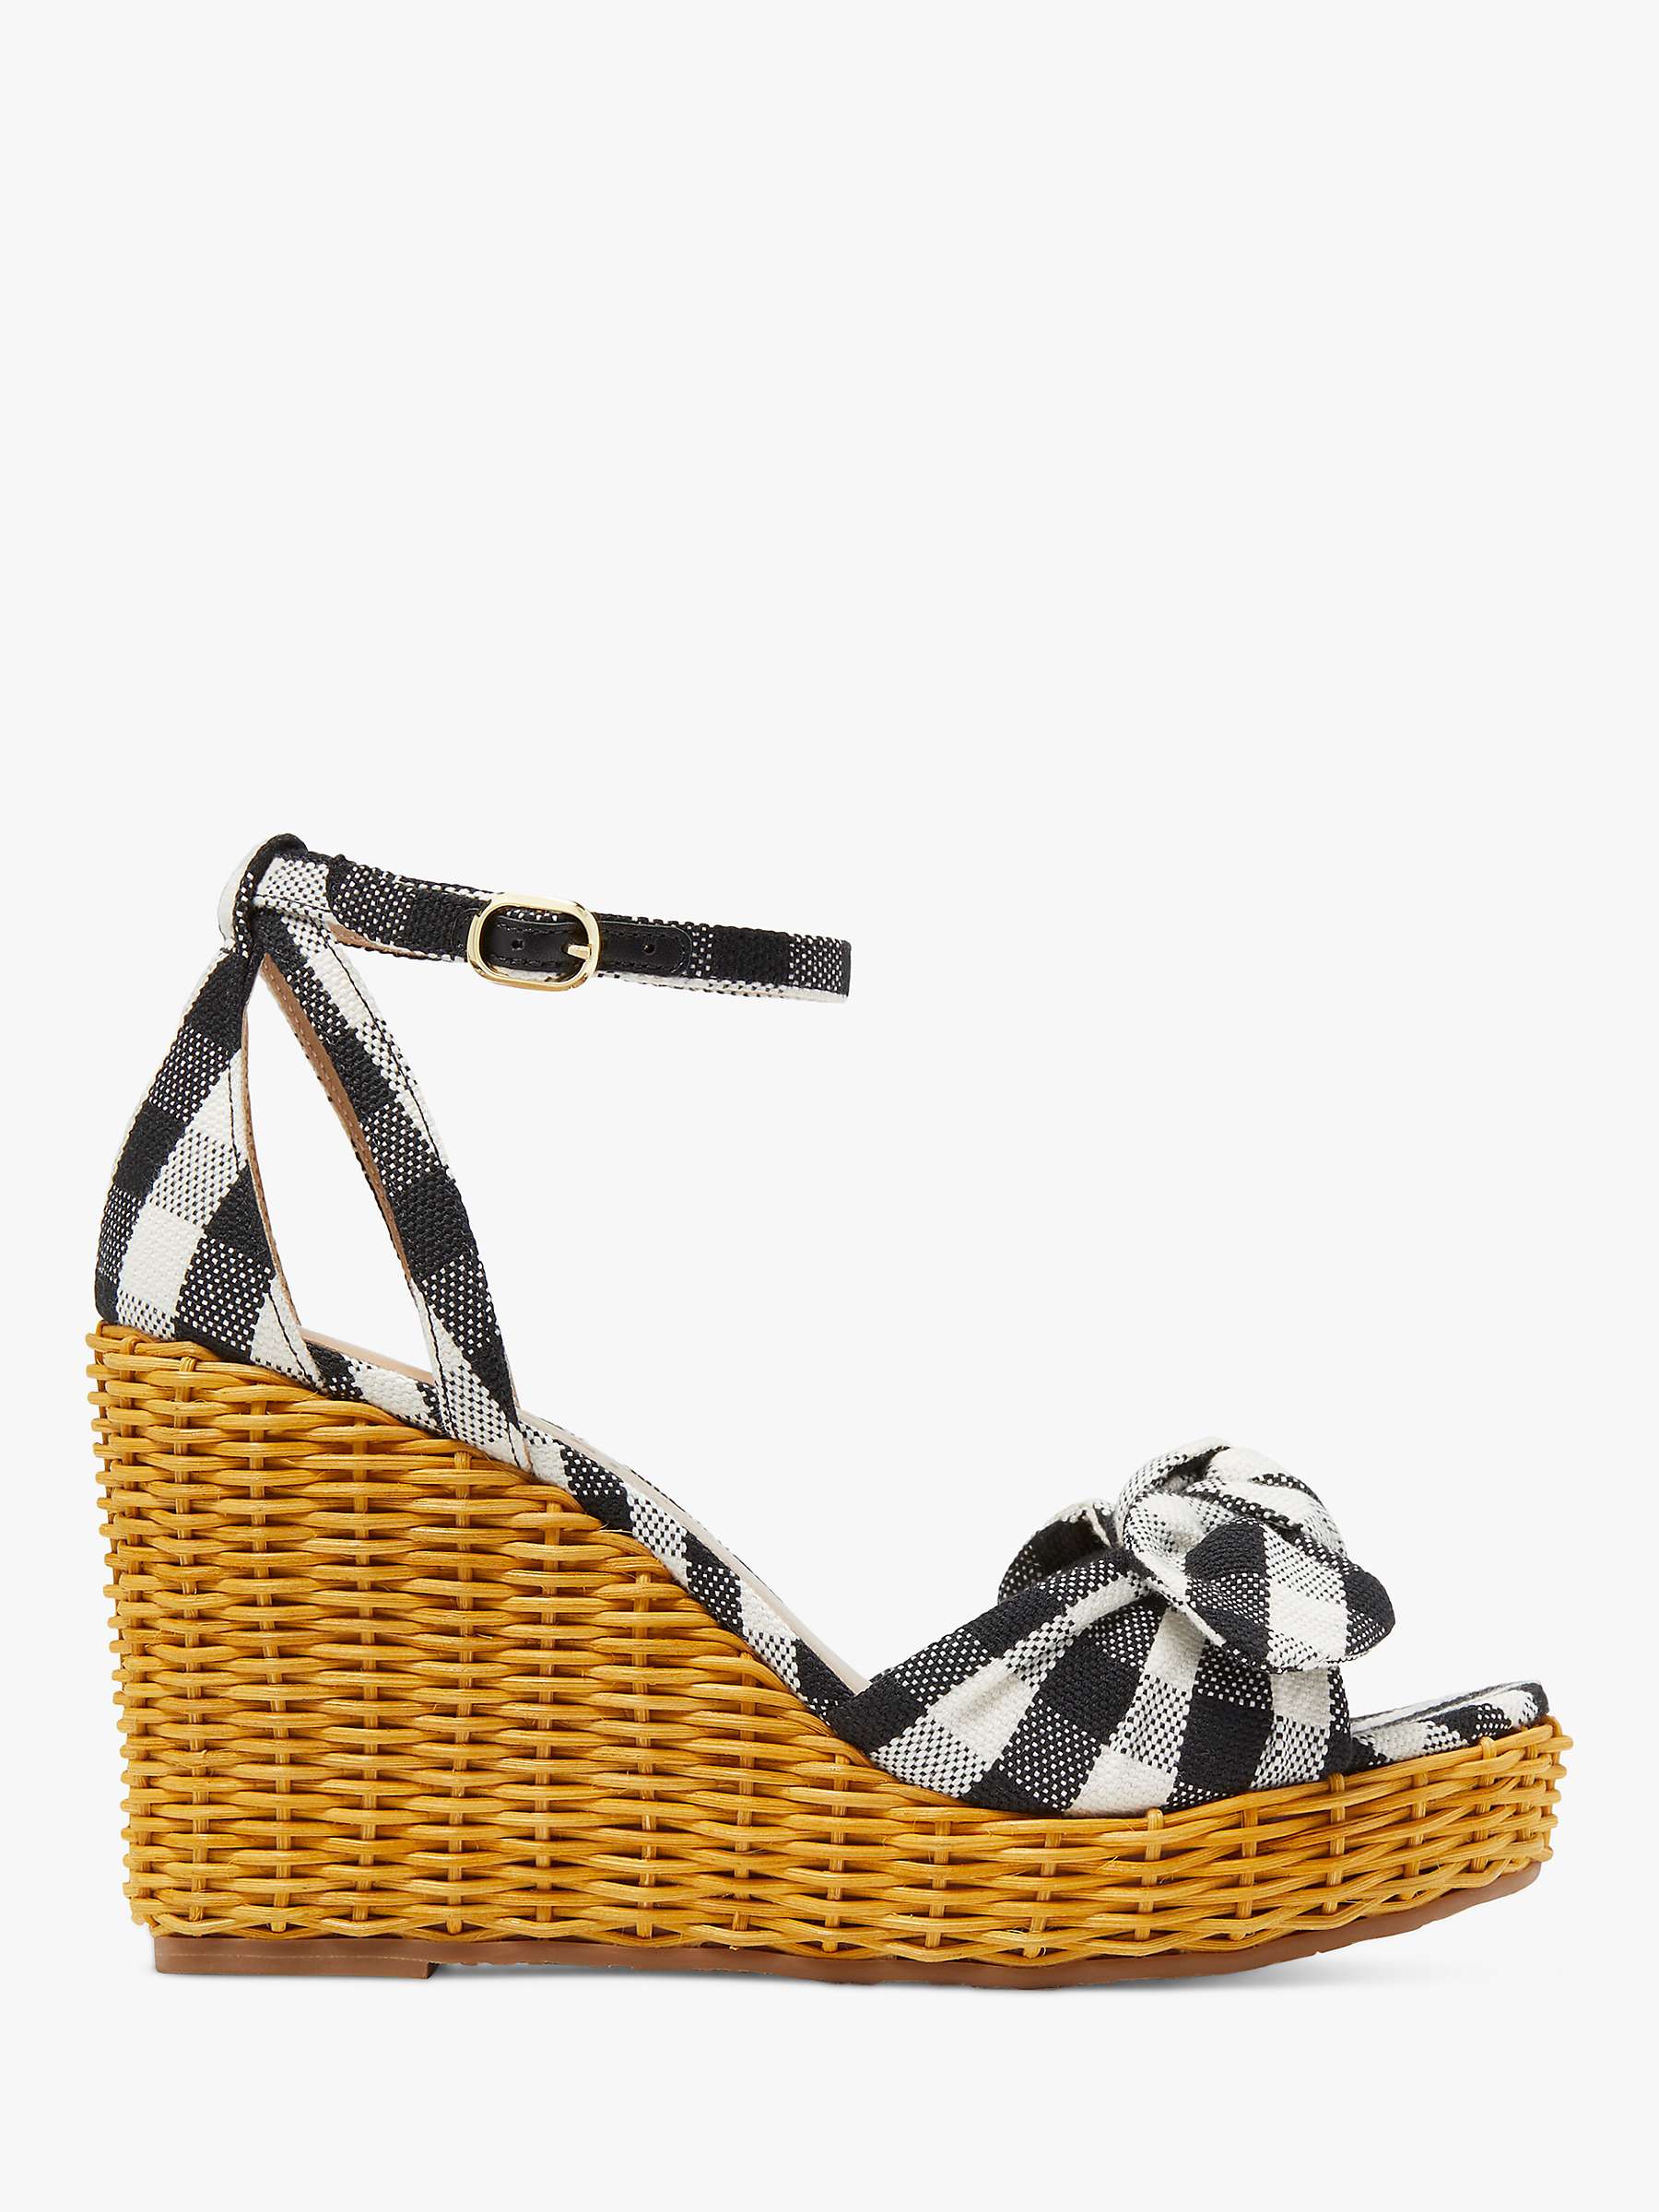 Buy kate spade new york Tianna Wicker Wedge Heel Sandals, Black/Cream Online at johnlewis.com